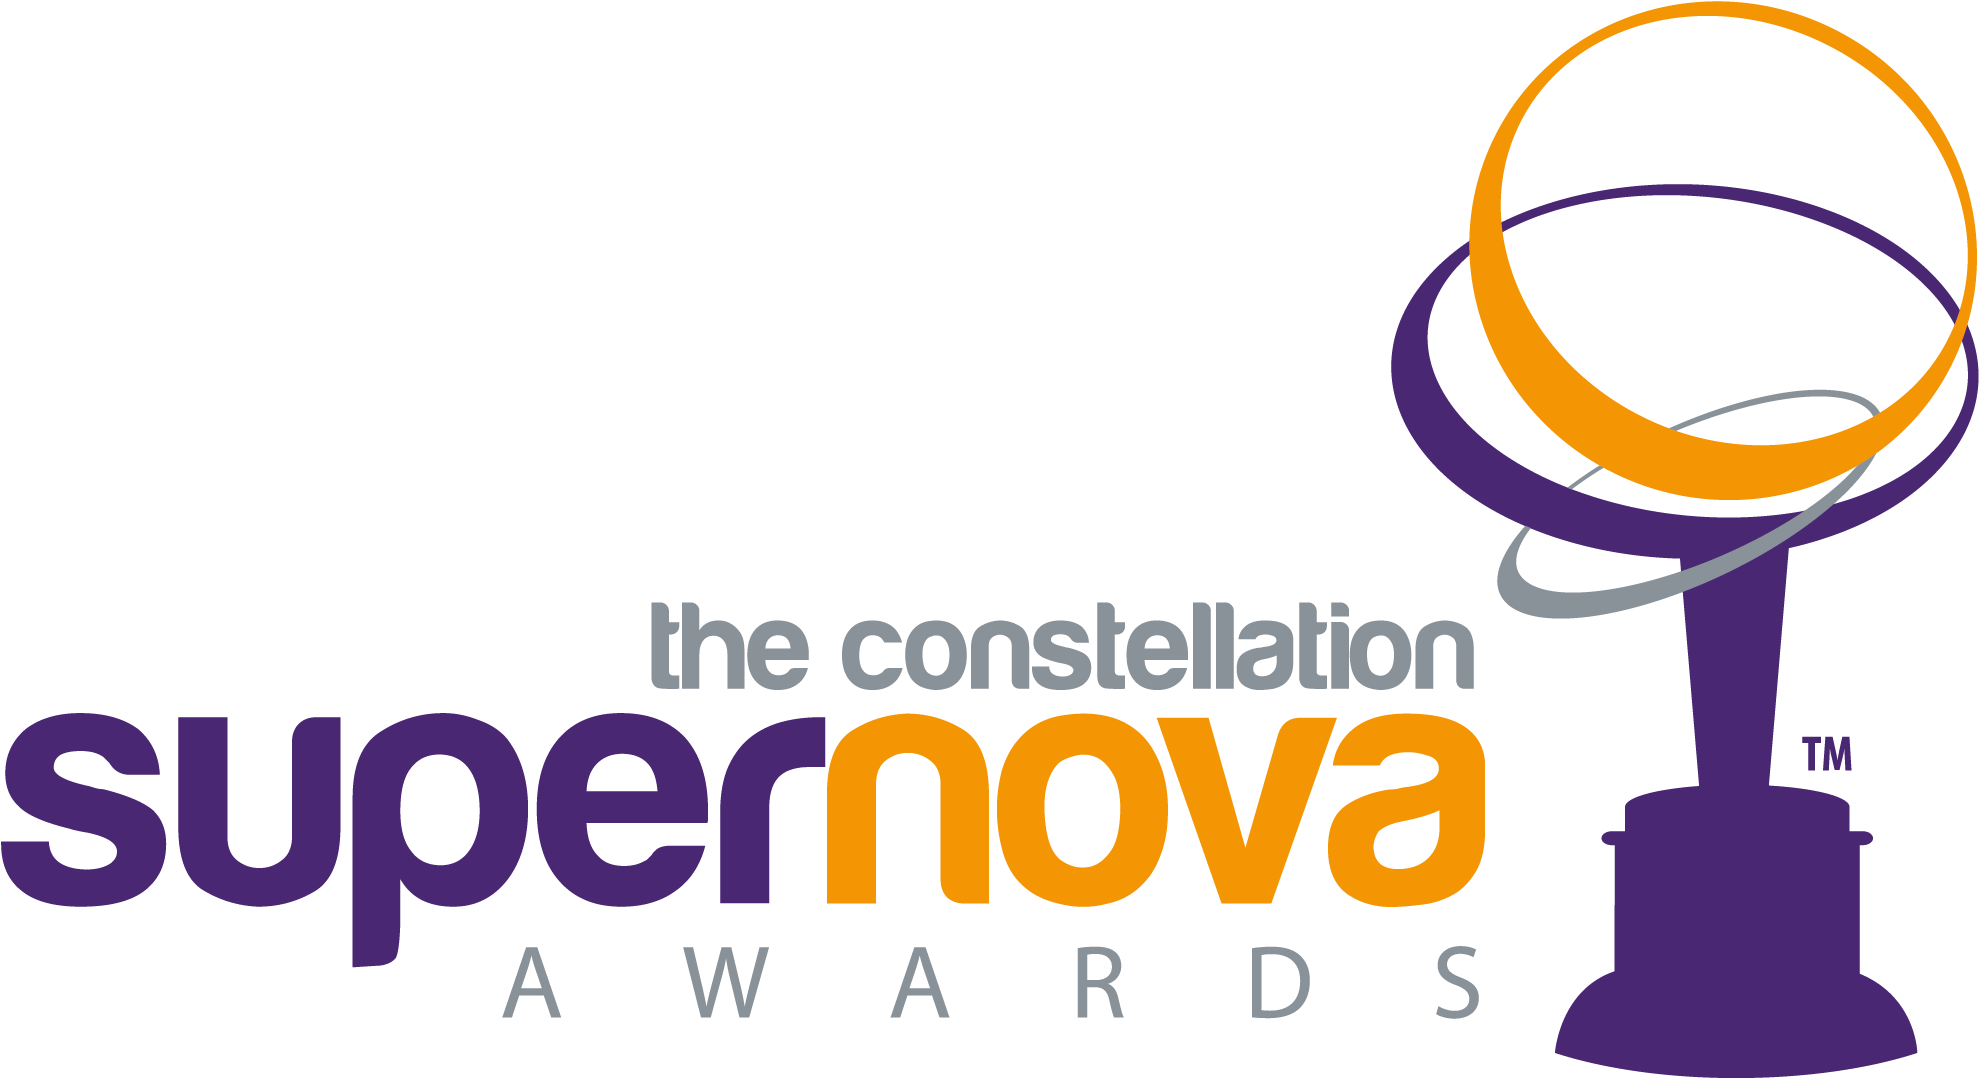 Supernova Awards Logo - Supernova Awards (2085x1332), Png Download